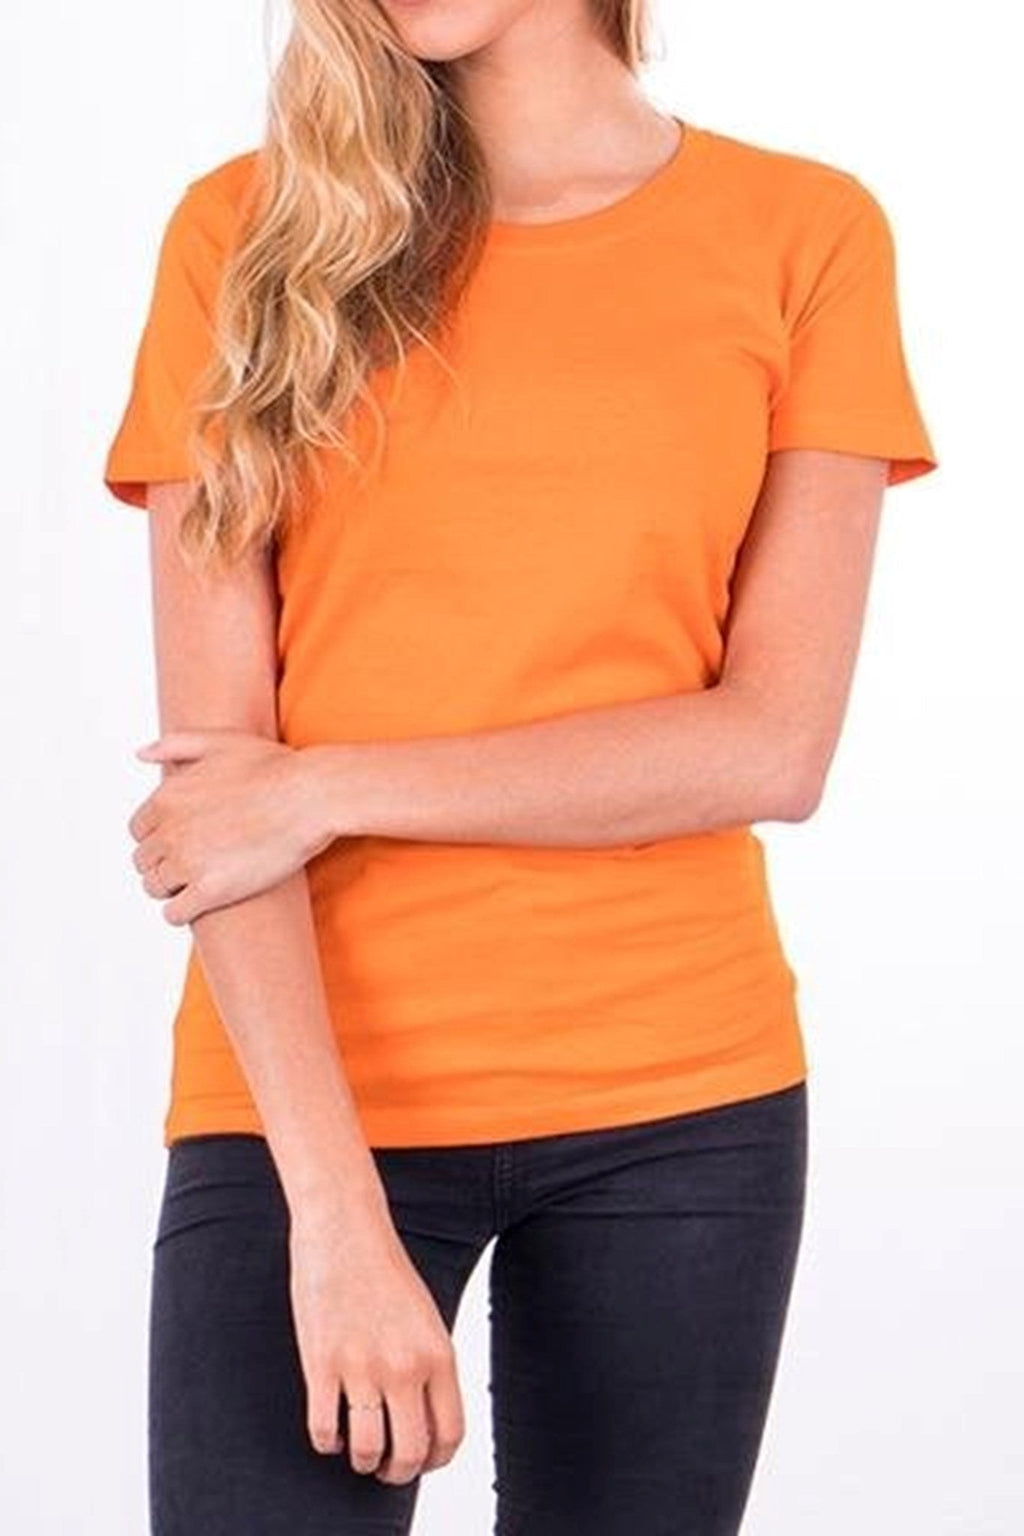 Camiseta ajustada - naranja